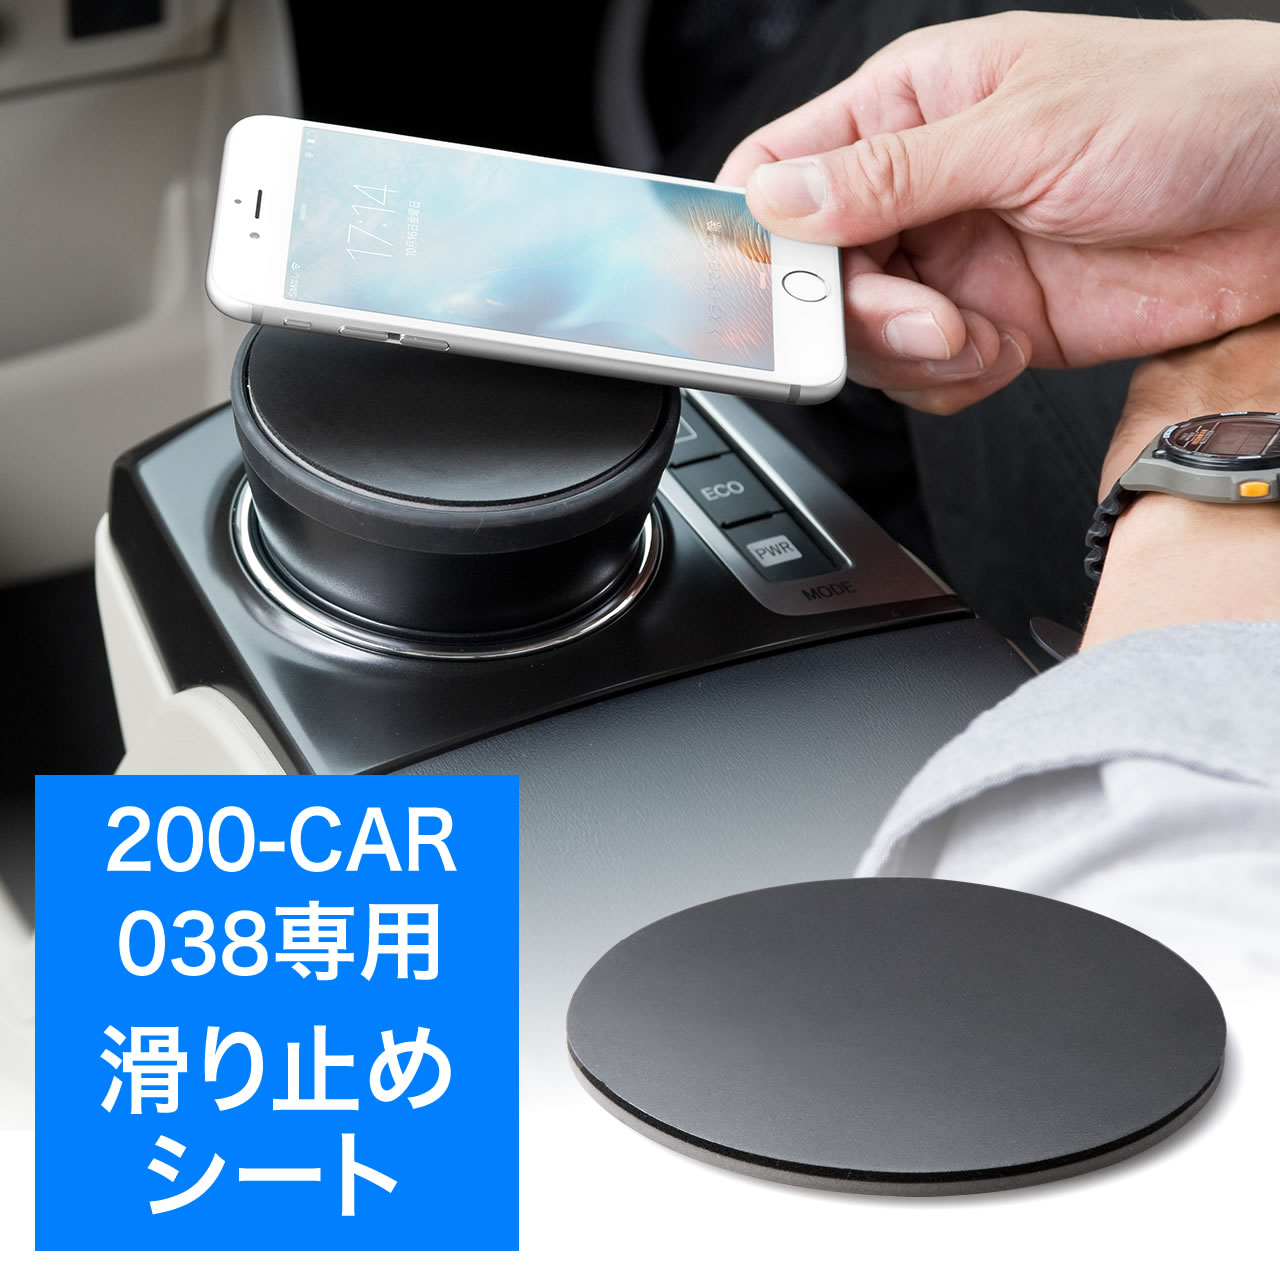 0 Car038専用すべり止めシート スマートフォンホルダー Iphone スマートキー対応 車載 日本製 0 Car038nsの販売商品 通販ならサンワダイレクト